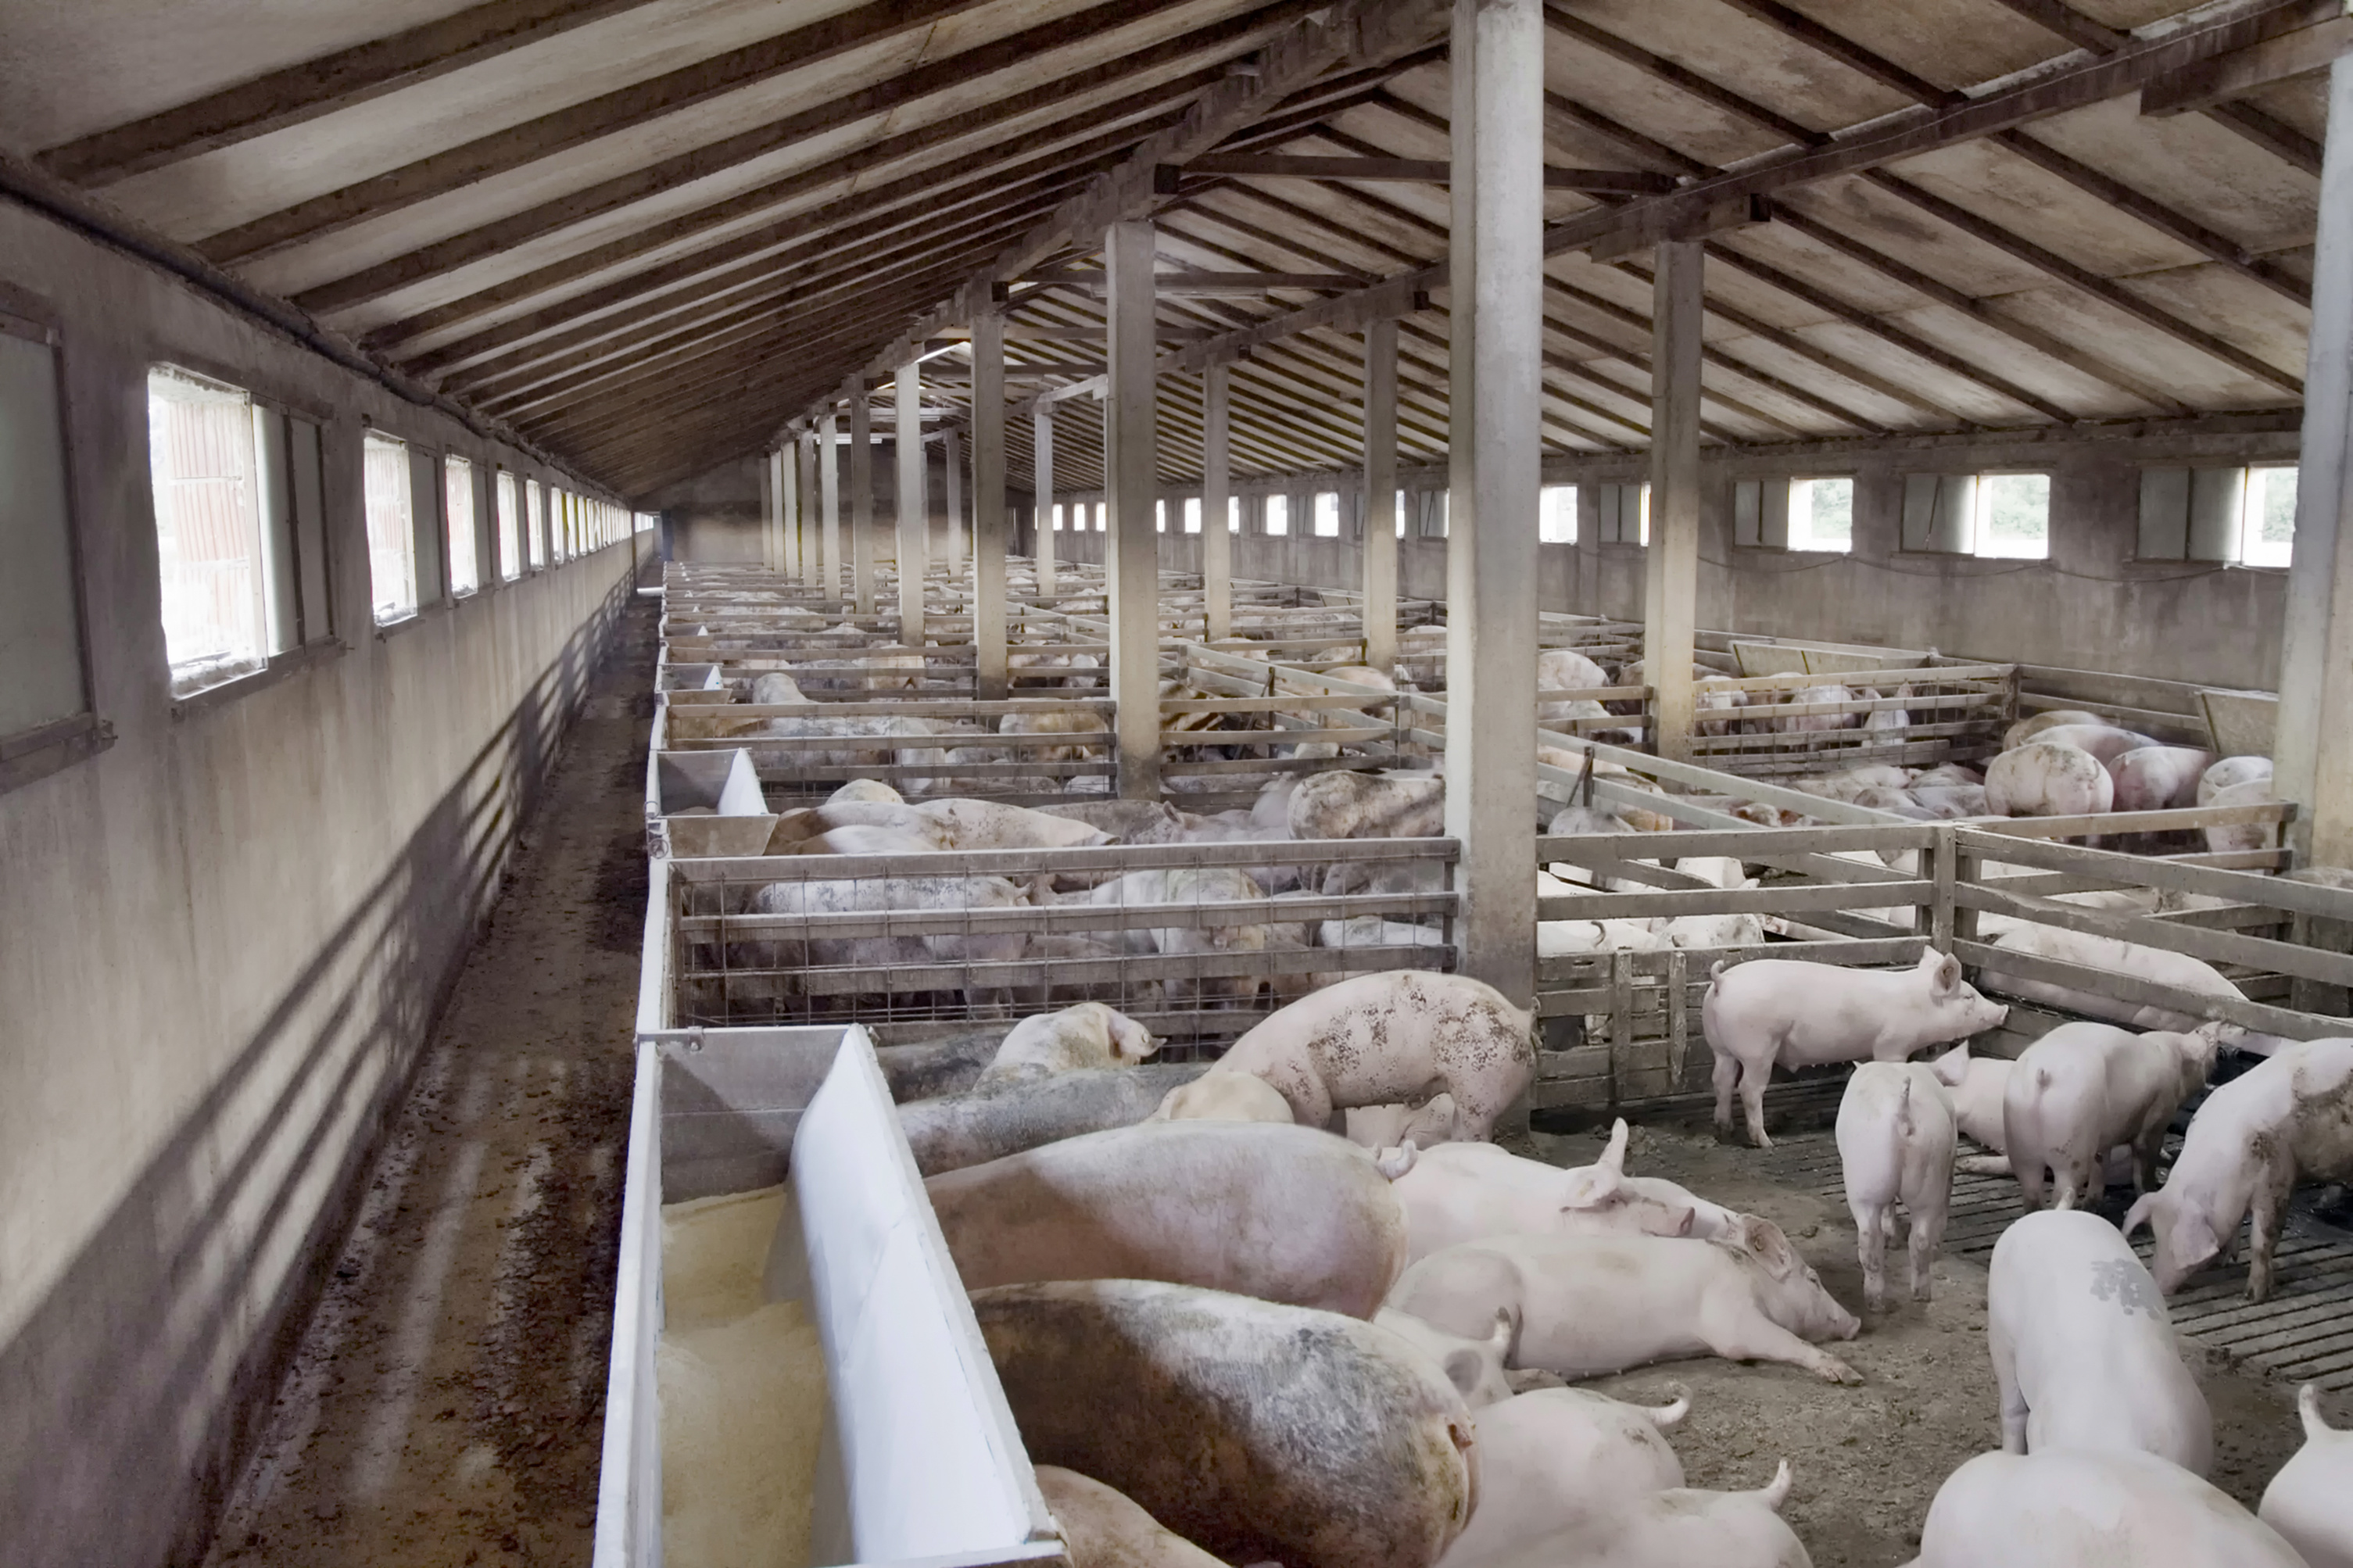 pigs in an indoor barn